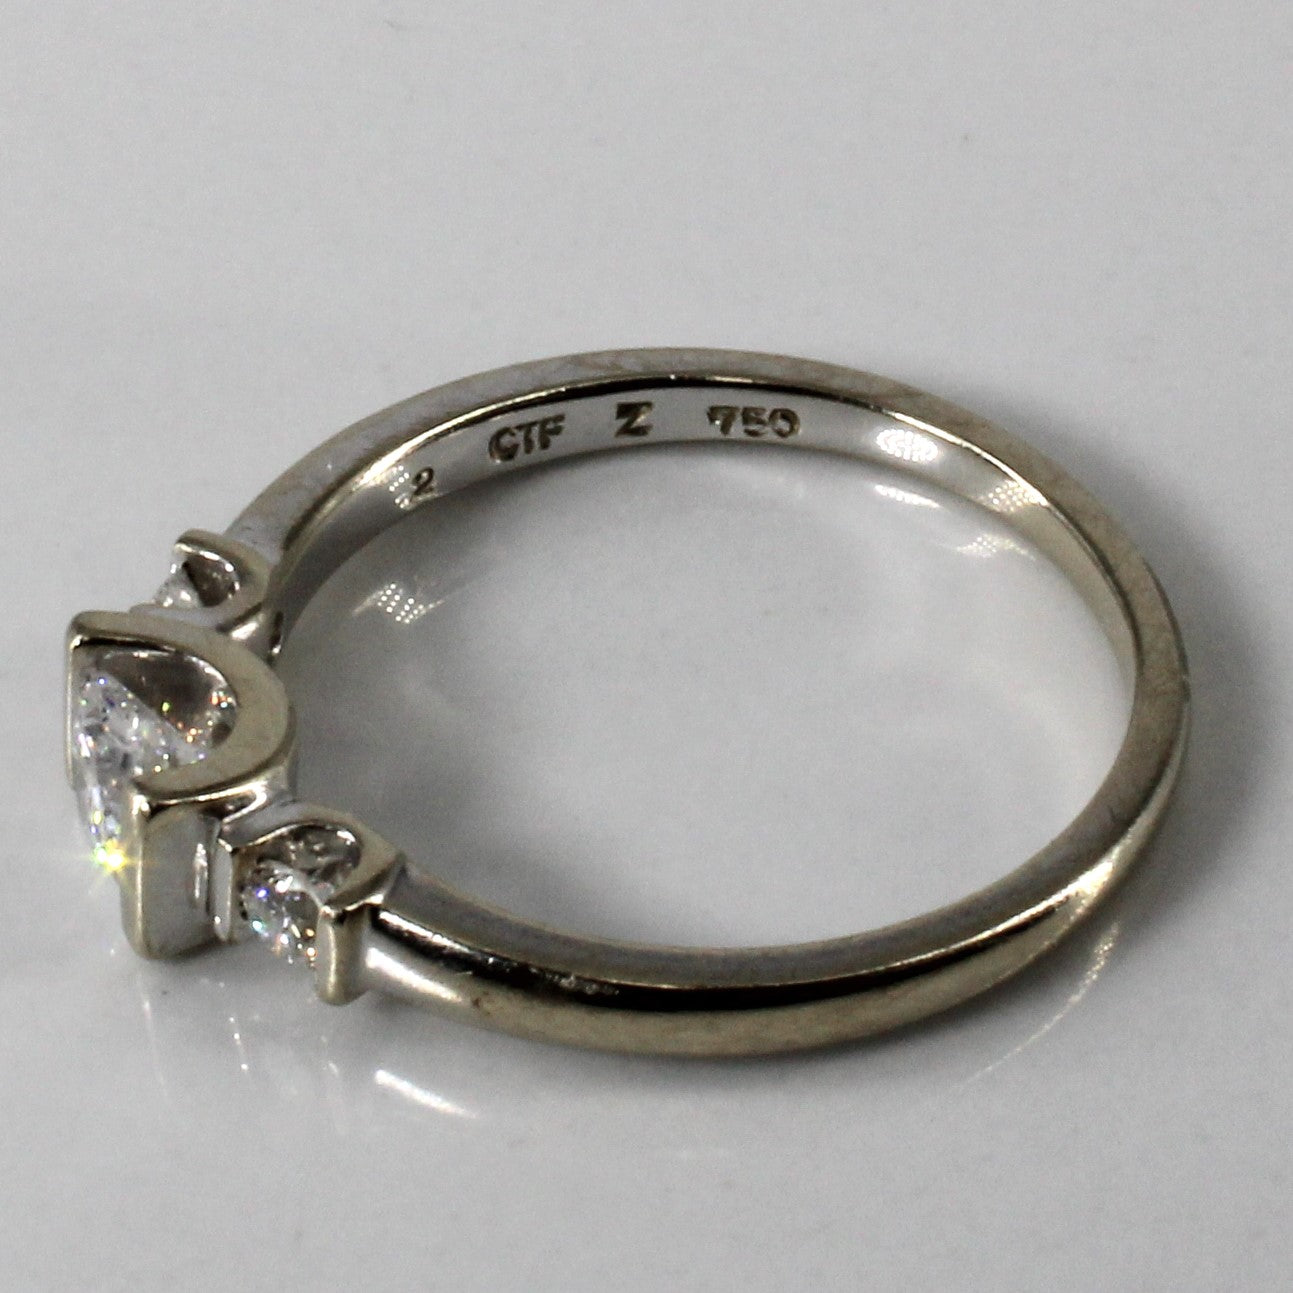 Three Stone Diamond Ring | 0.44ctw | SZ 6.75 |